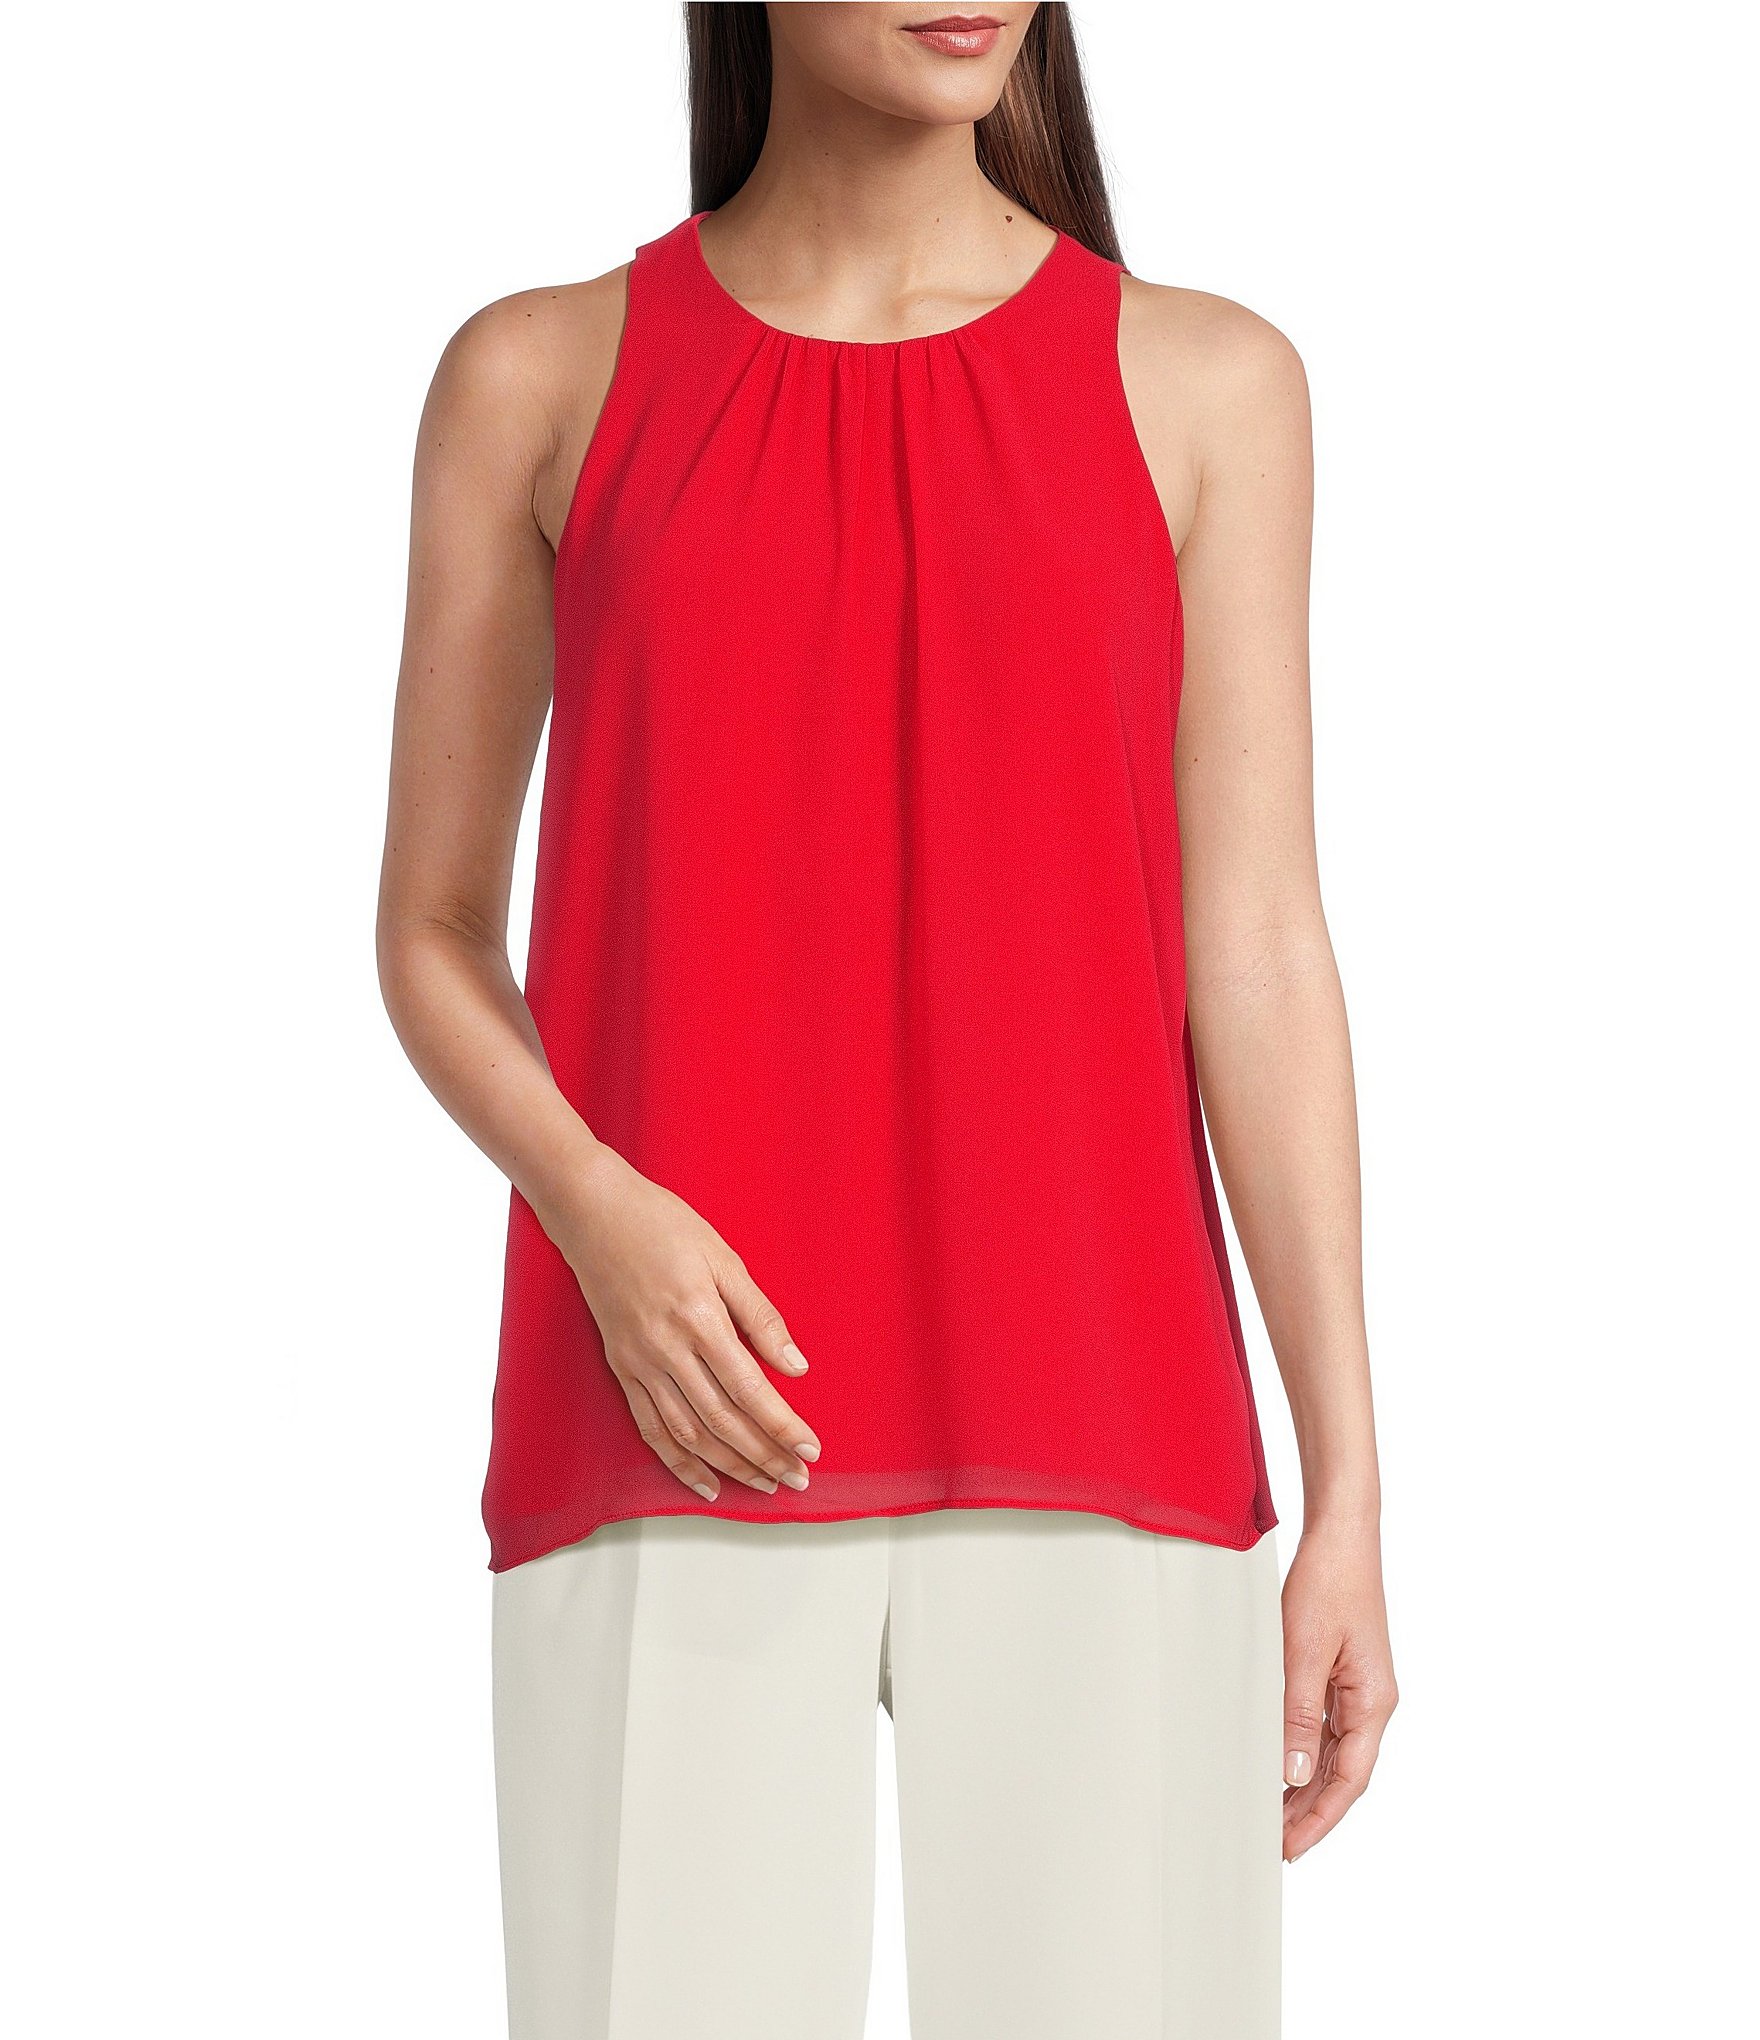 Nedrustning Objector skandale sleeveless blouse: Women's Tops & Dressy Tops | Dillard's